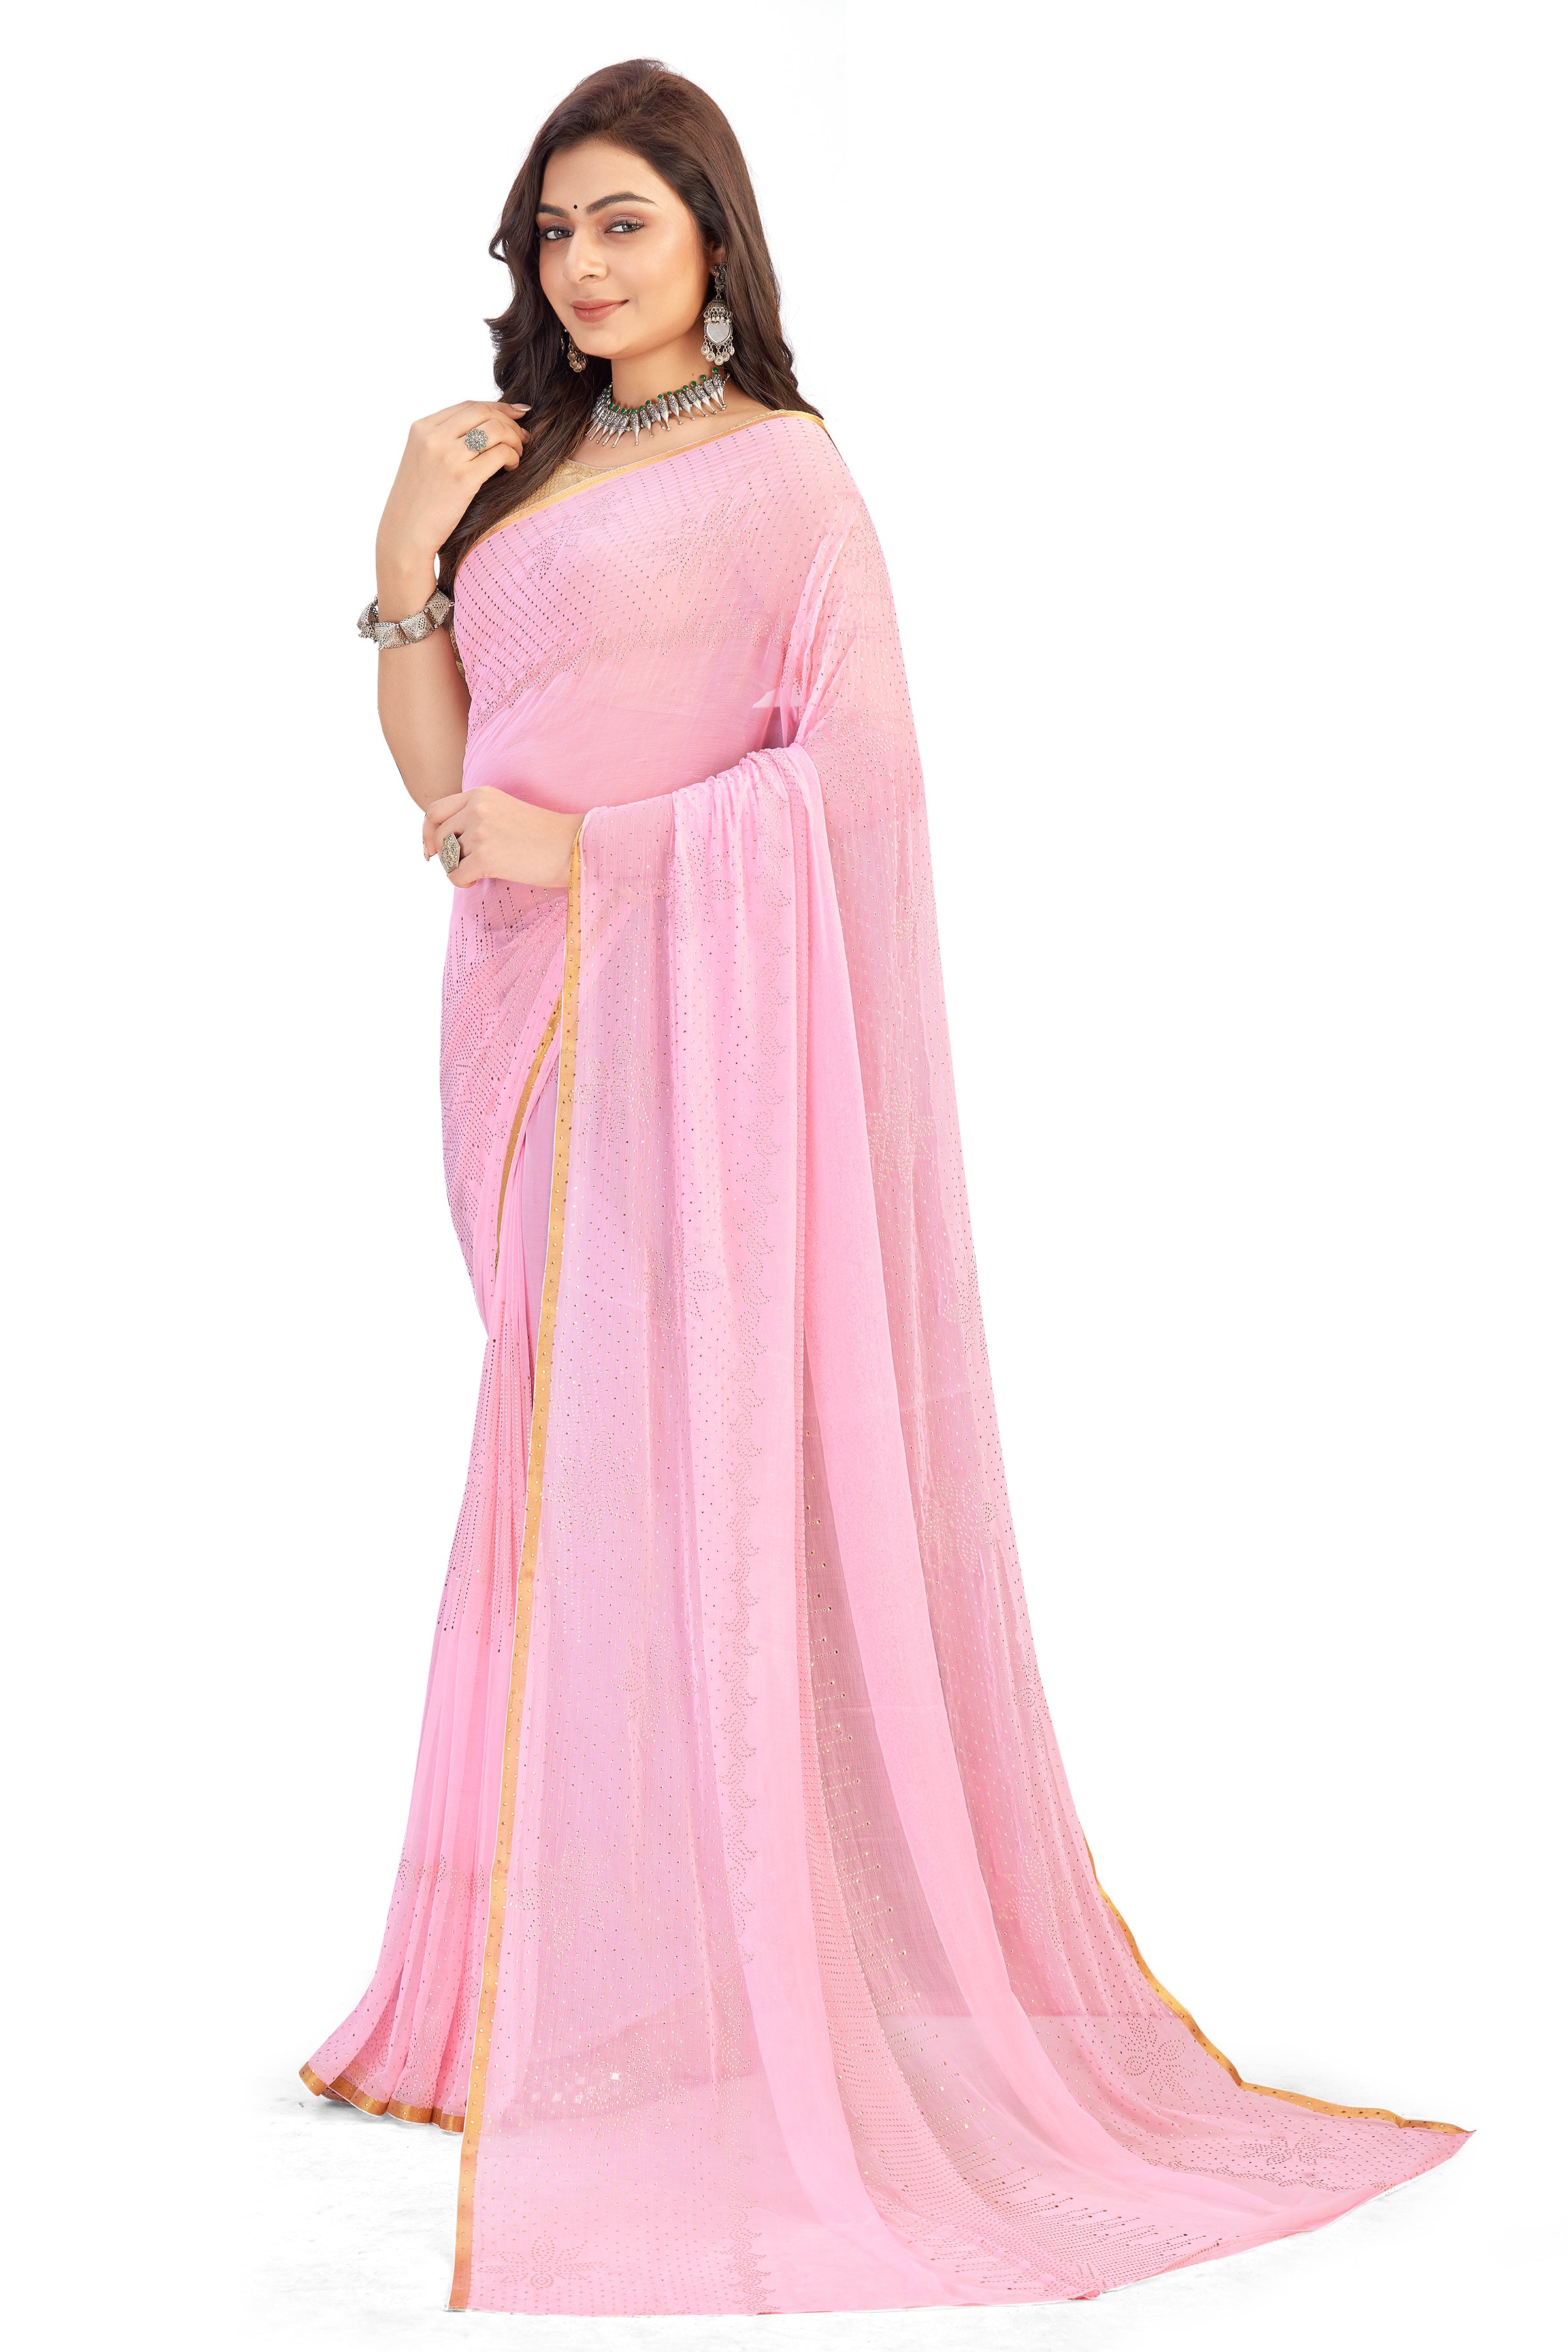 Women's Bandhani Daily Wear Chiffon Sari With Blouse Piece (Light PInk) - NIMIDHYA